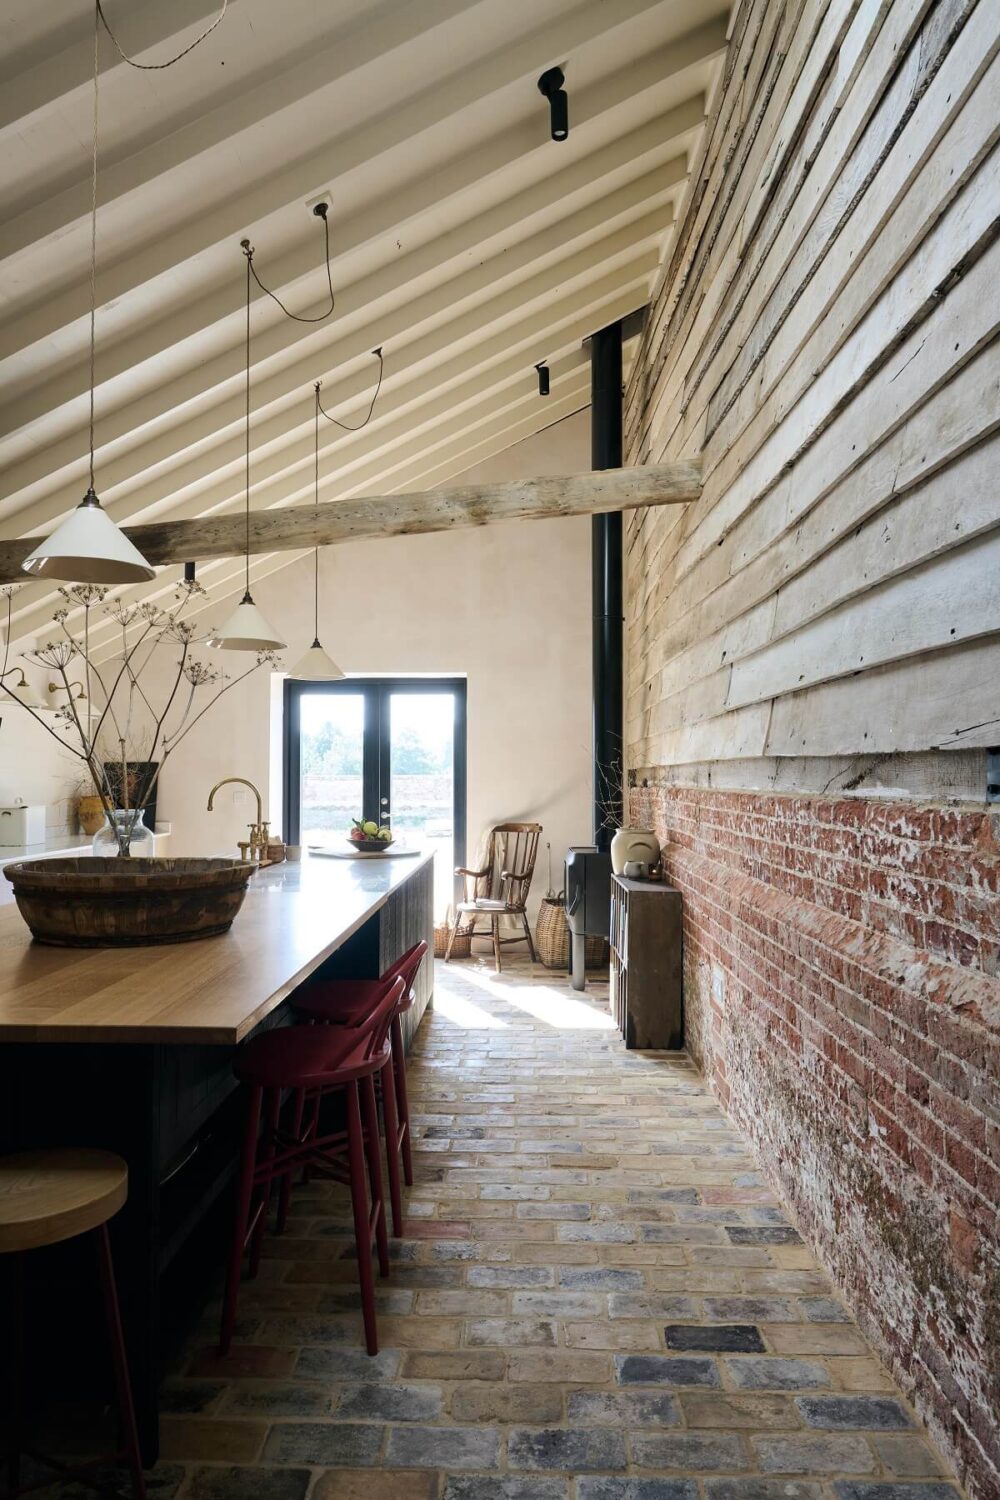 Kitchen-island-The-Sebastian-Cox-Kitchen-deVOL-bar-stone-floor-brick-wall-sloped-ceiling-nordroom